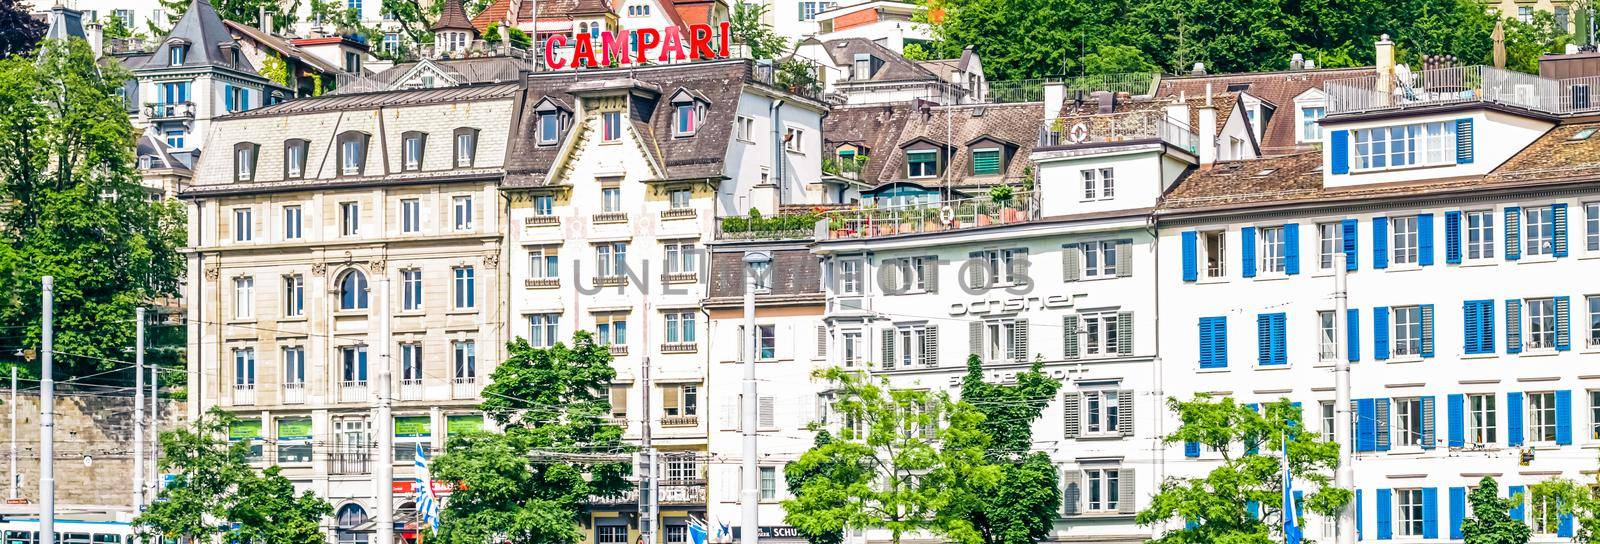 Zurich, Switzerland circa June 2021: Streets and historic Old Town buildings near main railway train station Zurich HB, Hauptbahnhof, Swiss architecture and travel destination